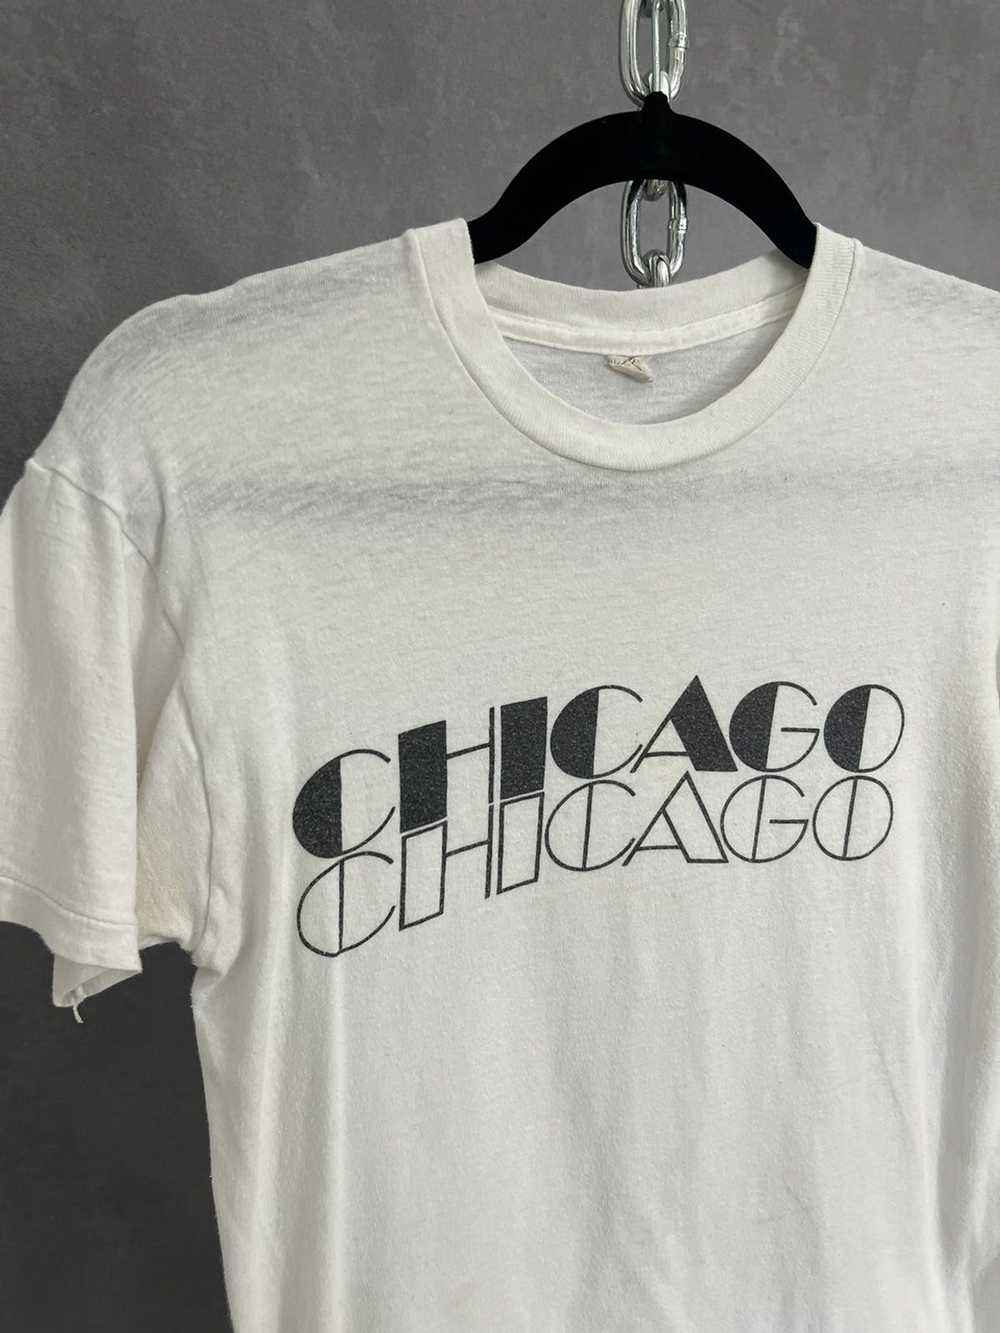 Vintage Vintage 80s Chicago single stitch shirt s… - image 4